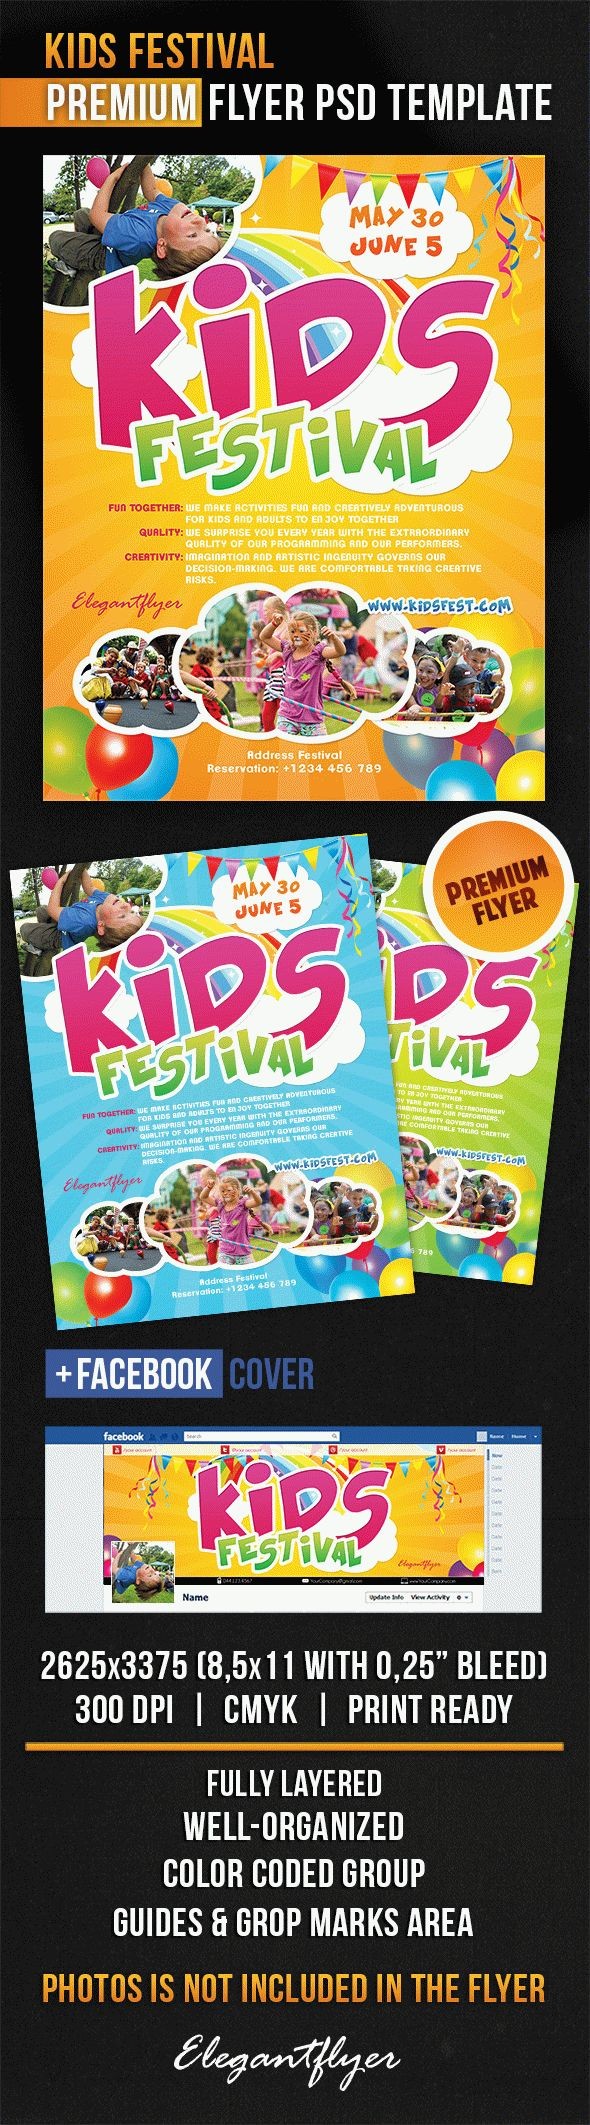 Kids Festival by ElegantFlyer